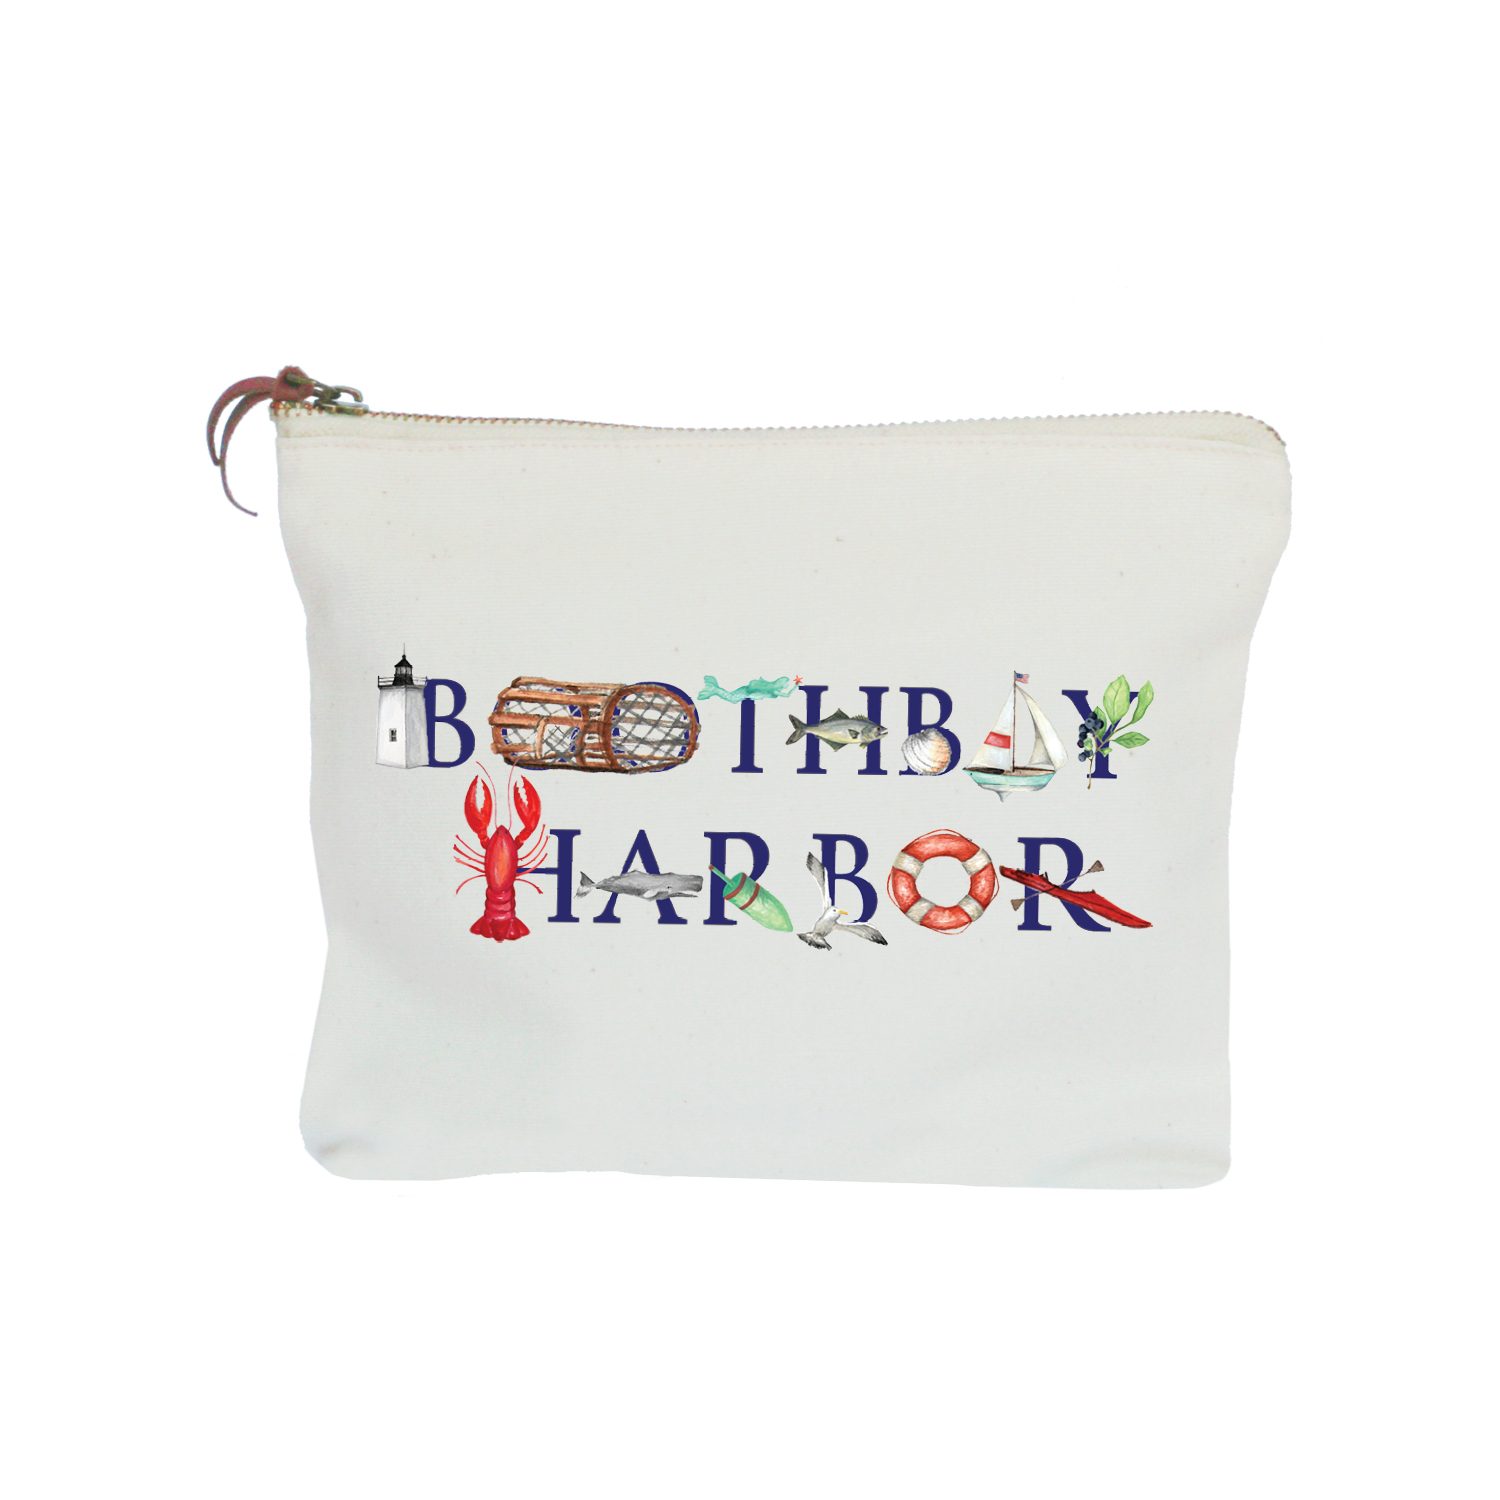 boothbay harbor zipper pouch